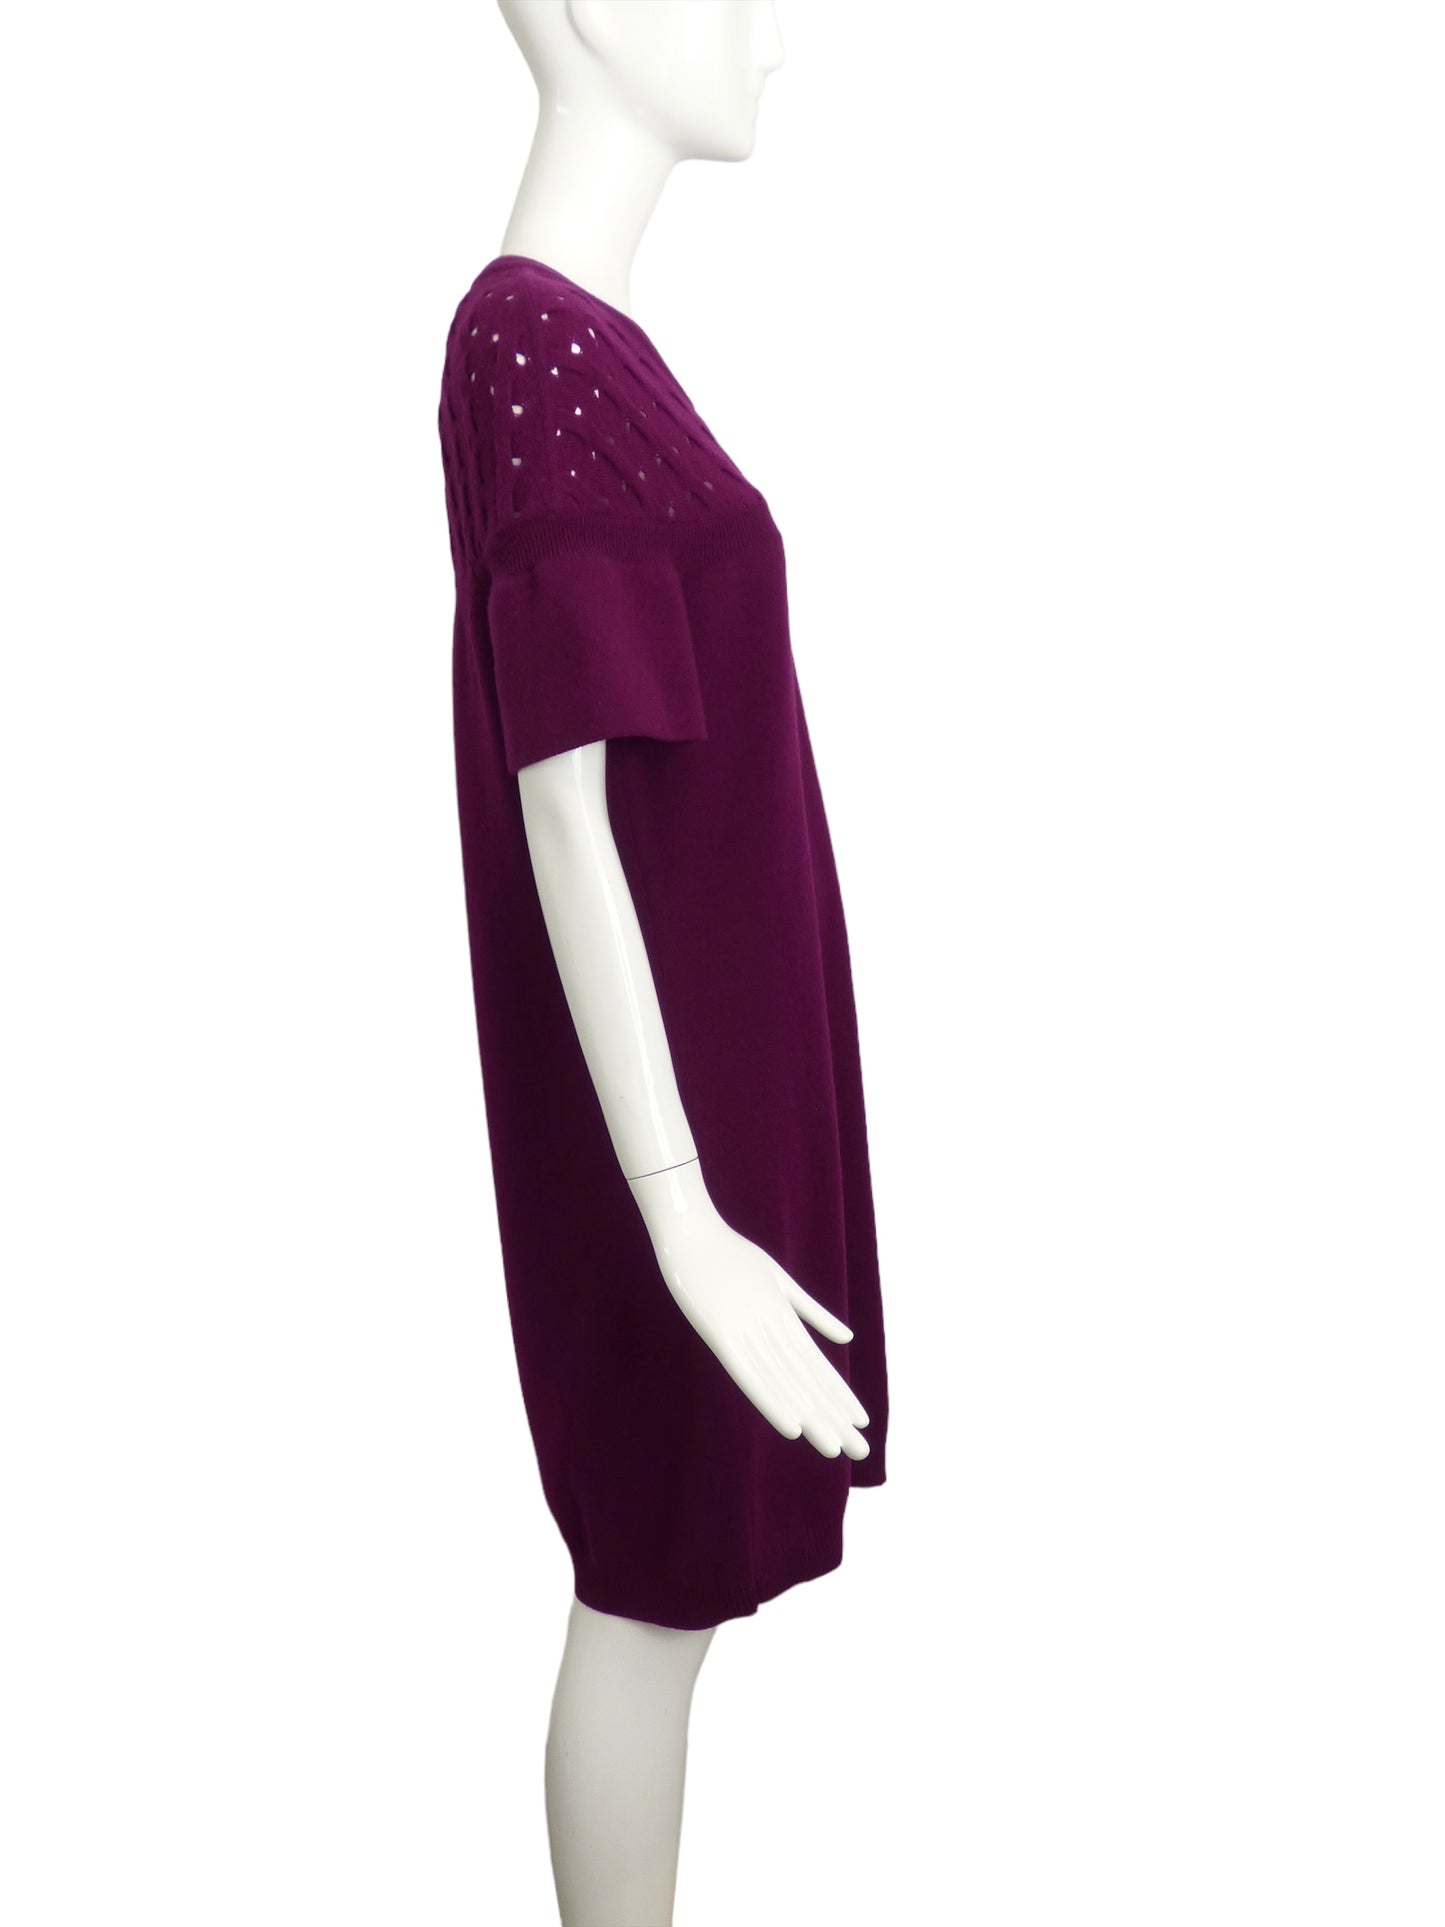 CHANEL-Raspberry Cashmere Sweater Knit Dress, Size-12